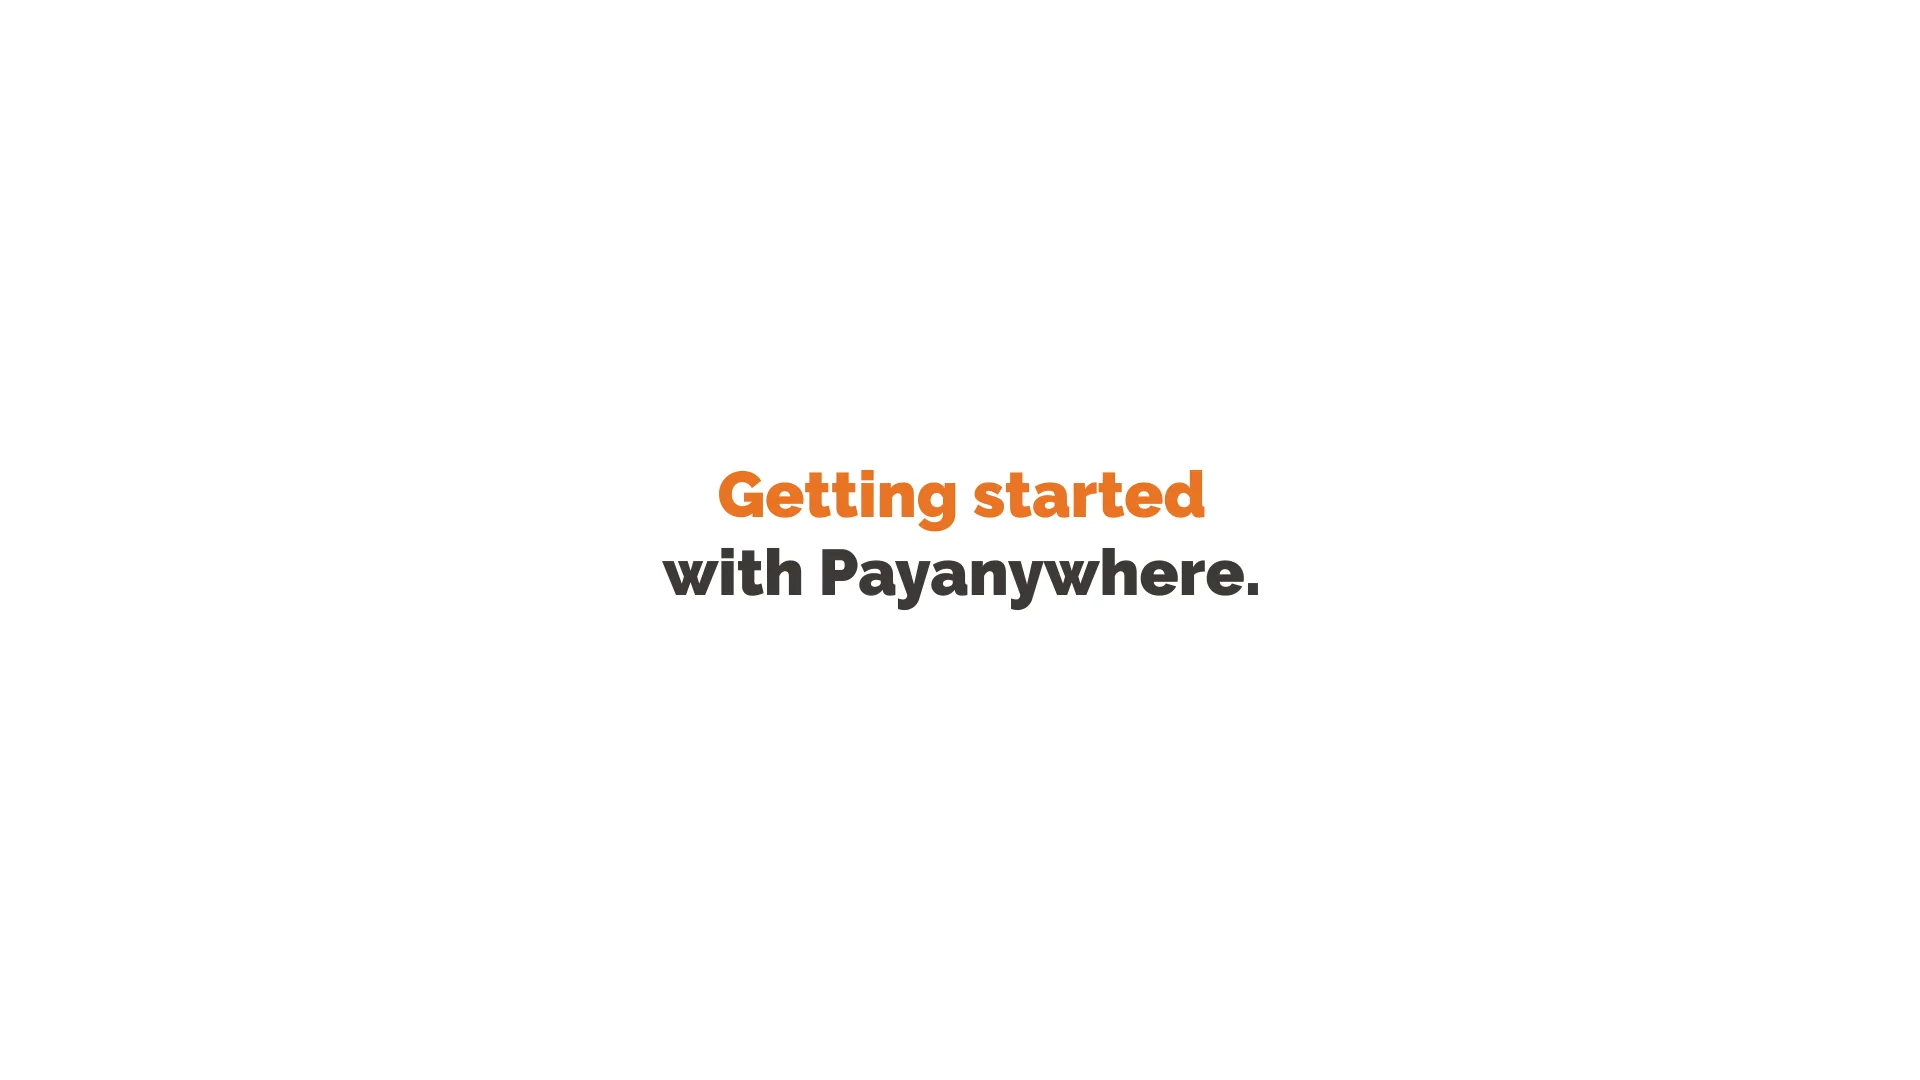 Introducing the Payanywhere Smart Flex on Vimeo